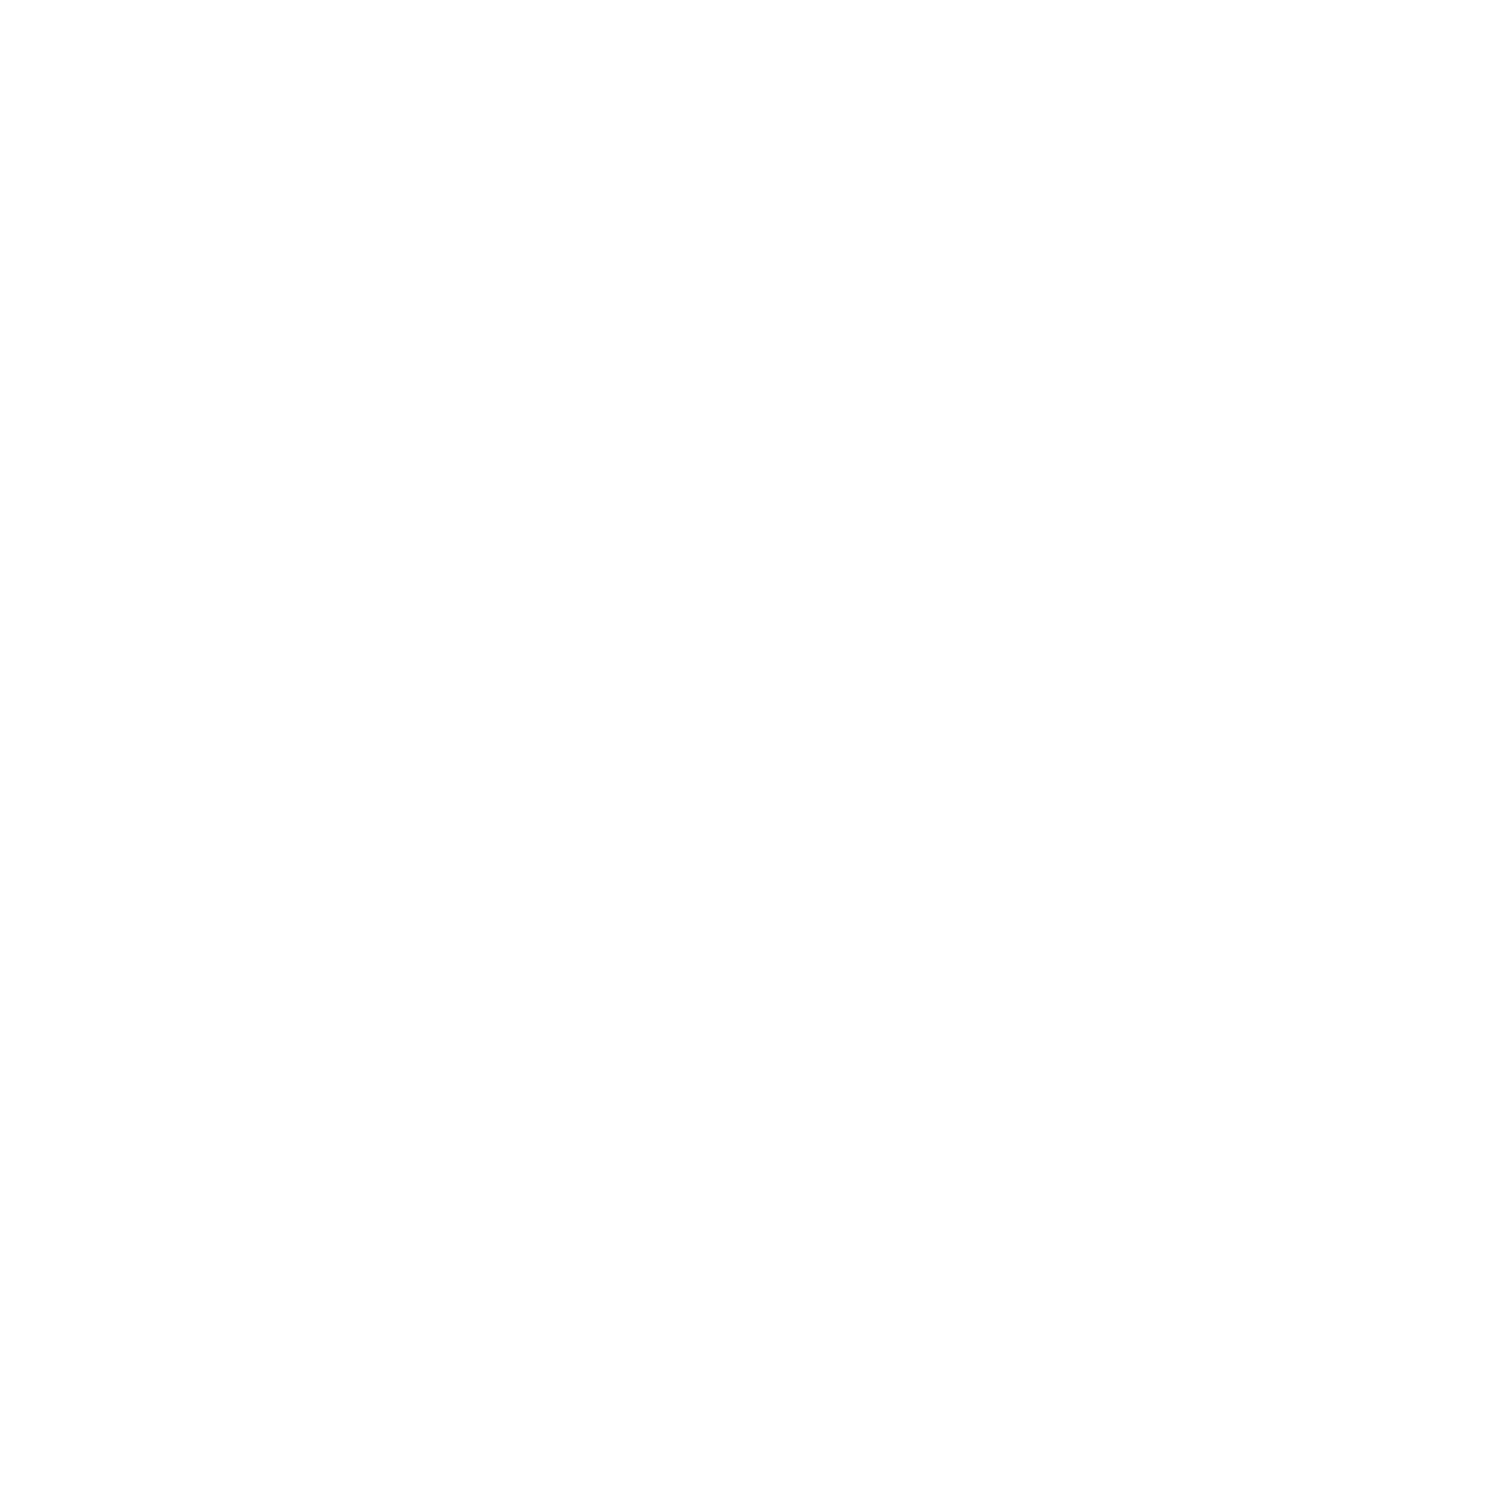 Shuffleboard-Club Weinfelden